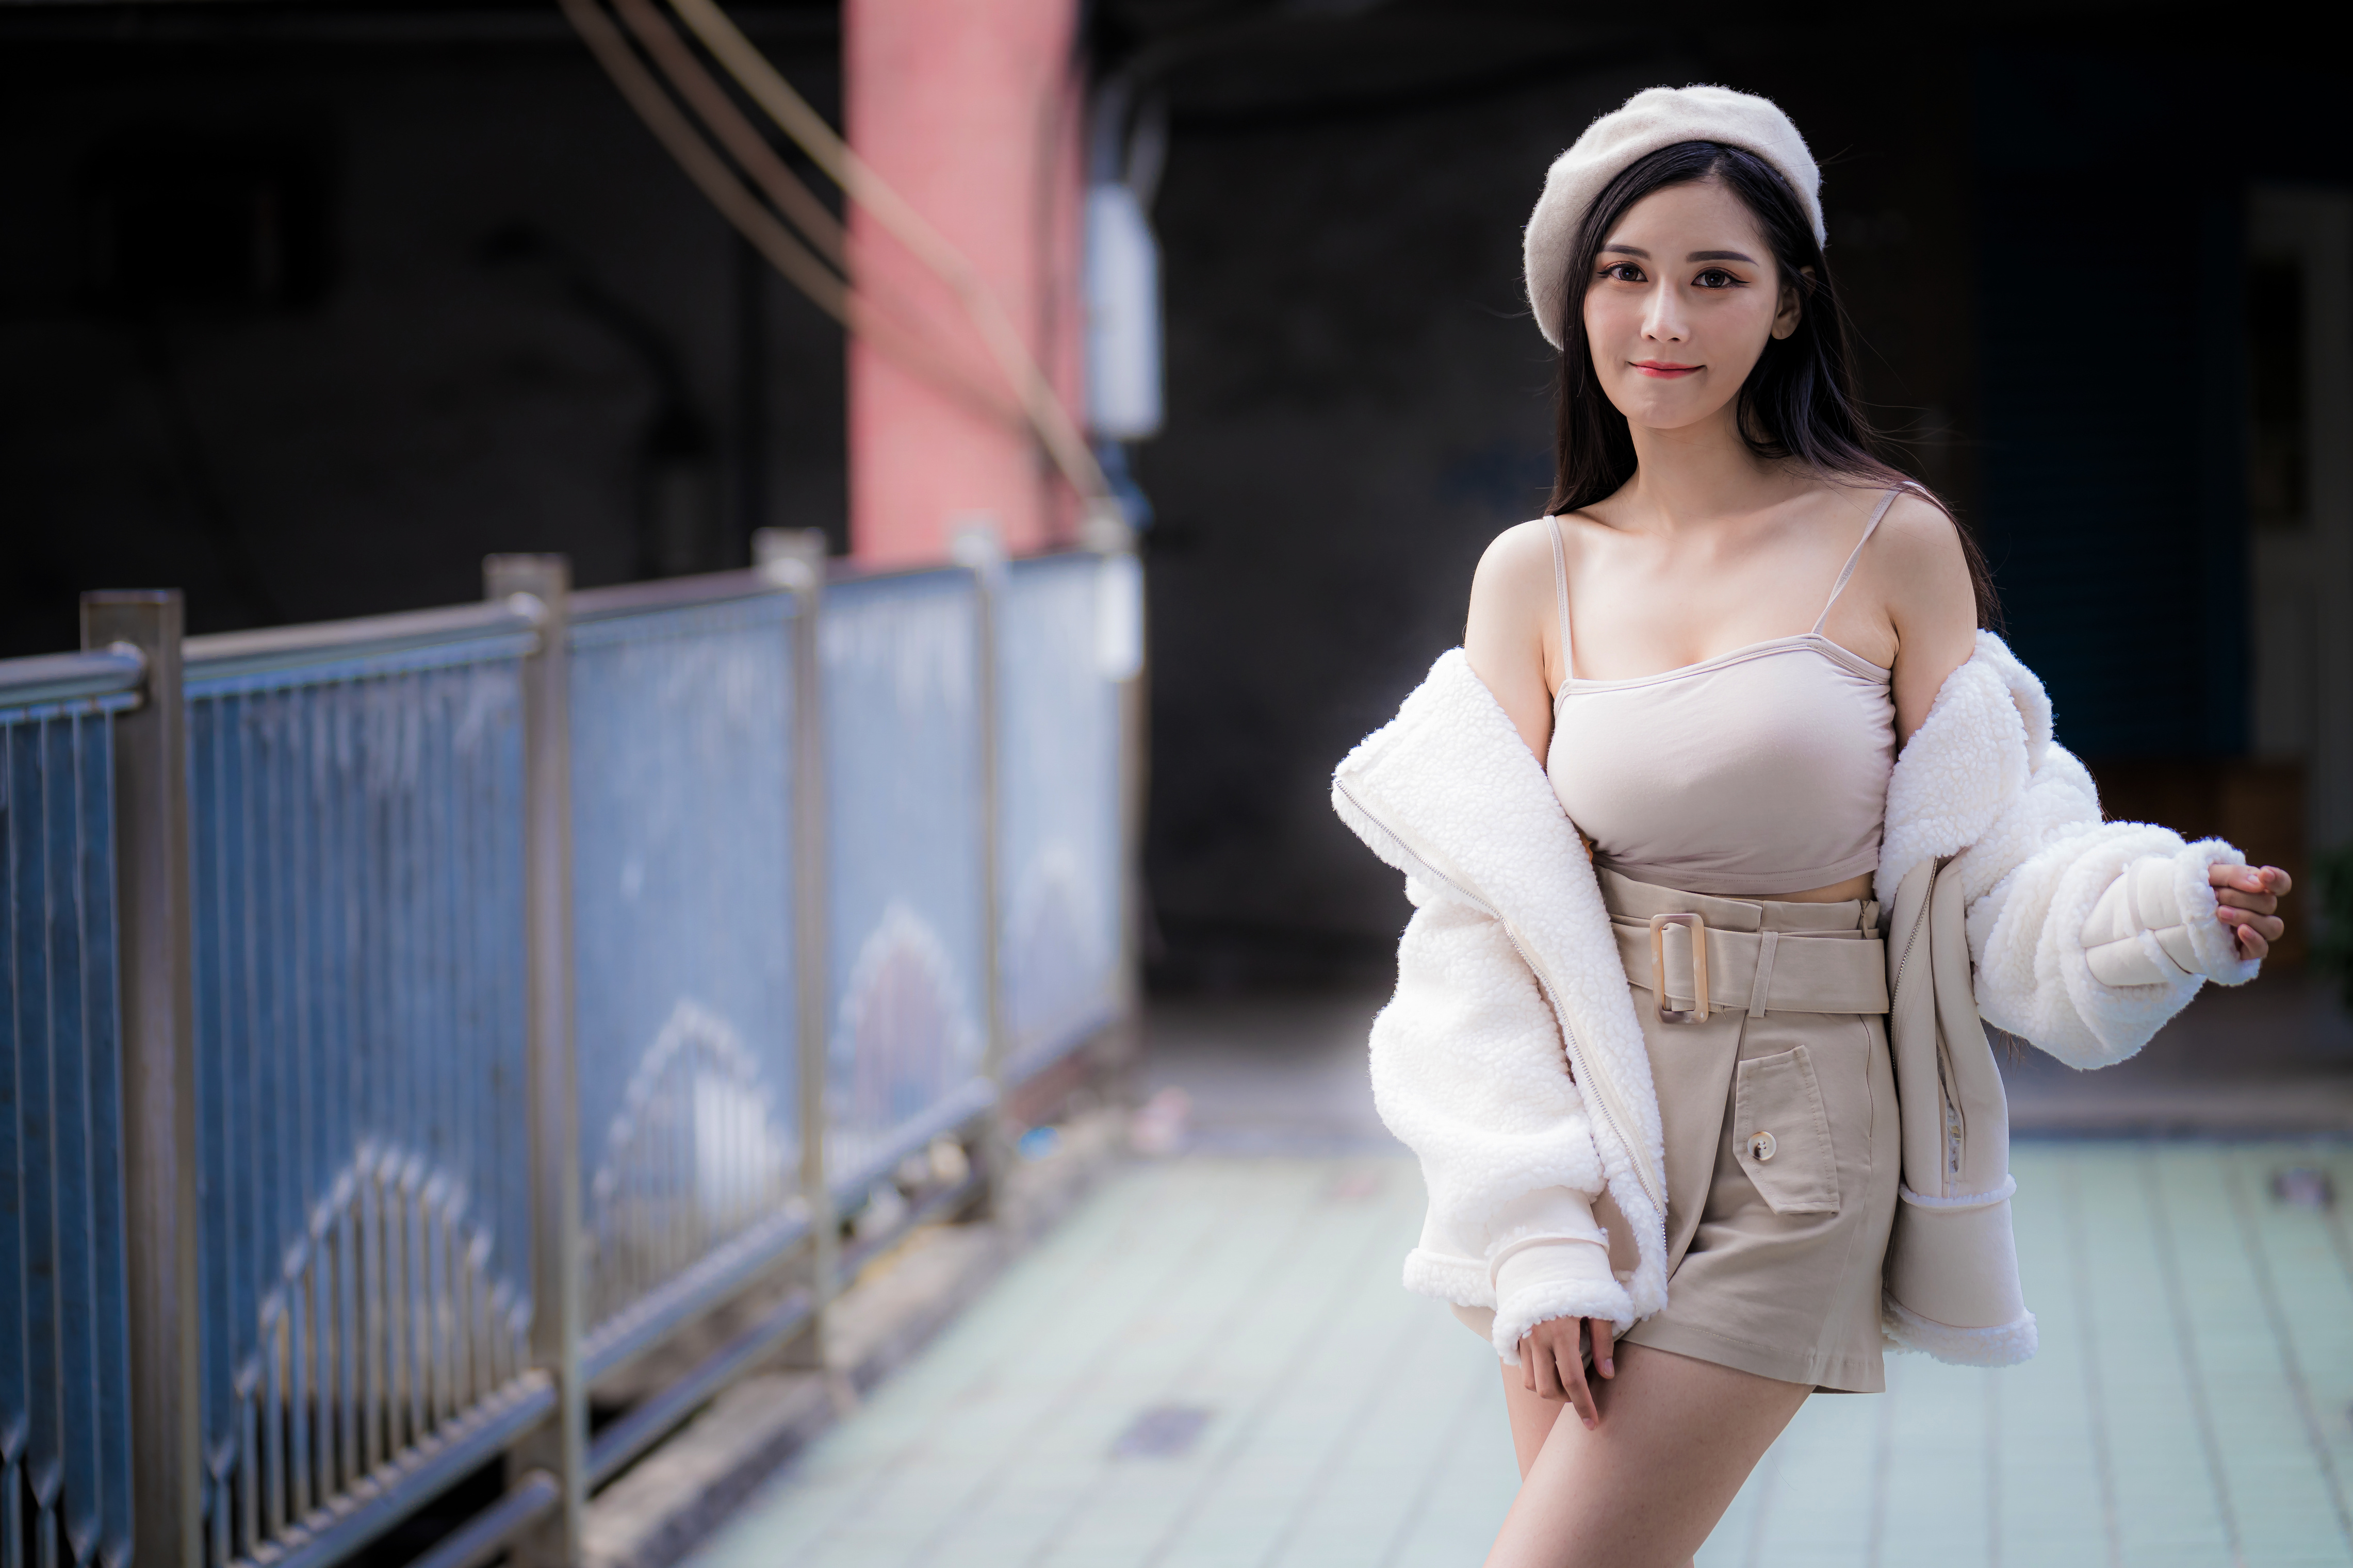 Asian Model Women Women Outdoors Long Hair Dark Hair Depth Of Field Column Railings Jacket Skirt Sho 4562x3041